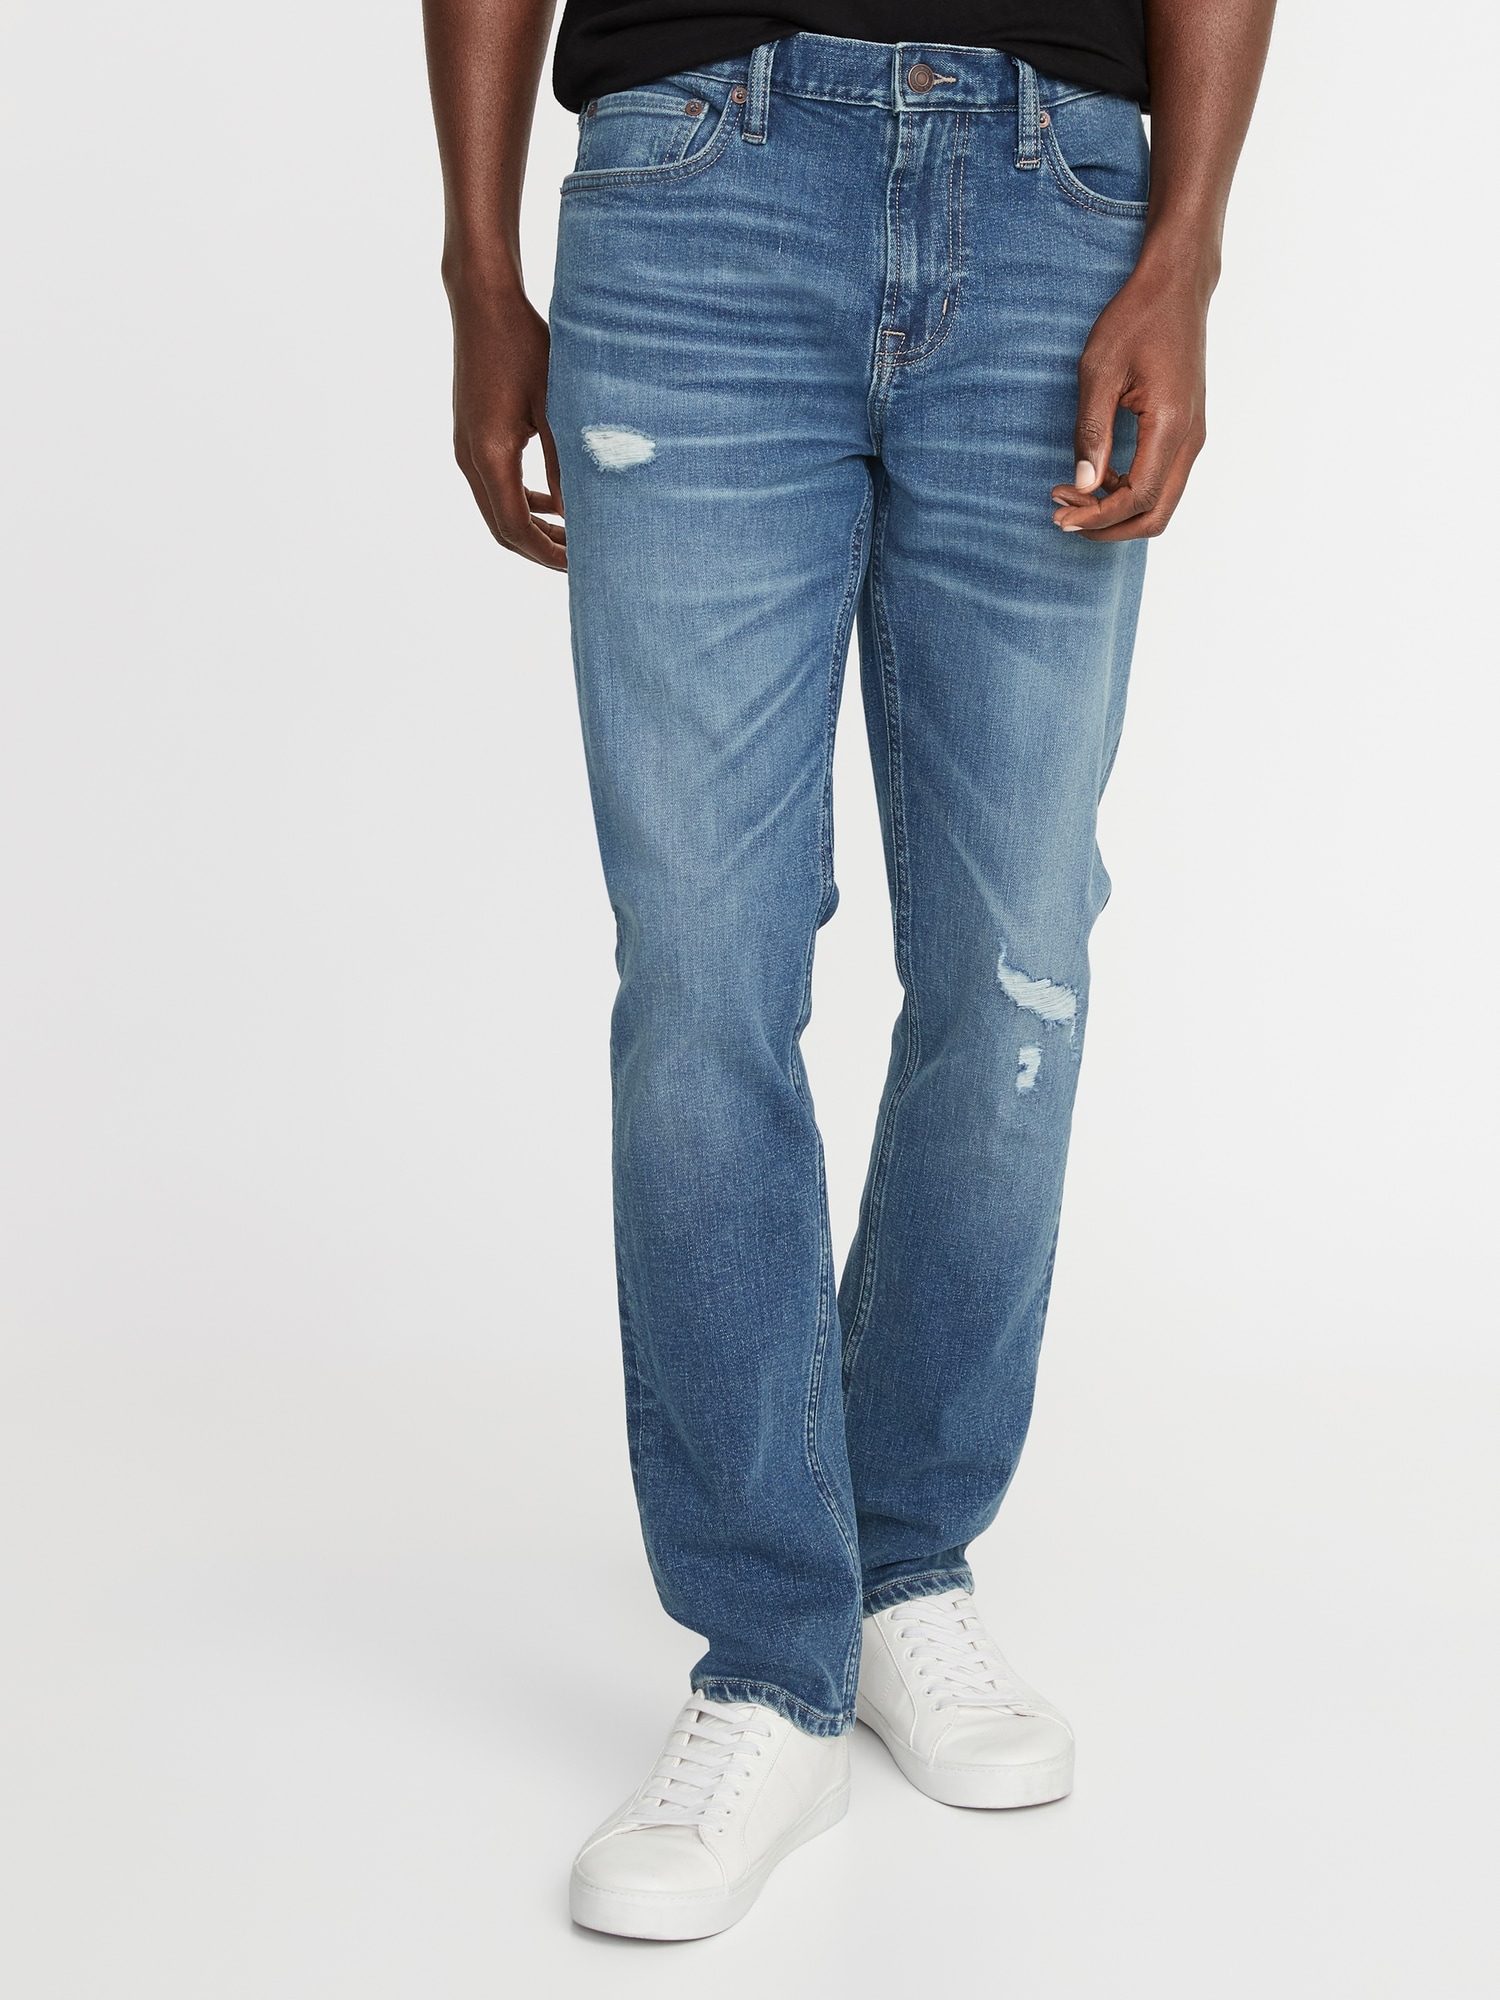 old navy slim flex jeans